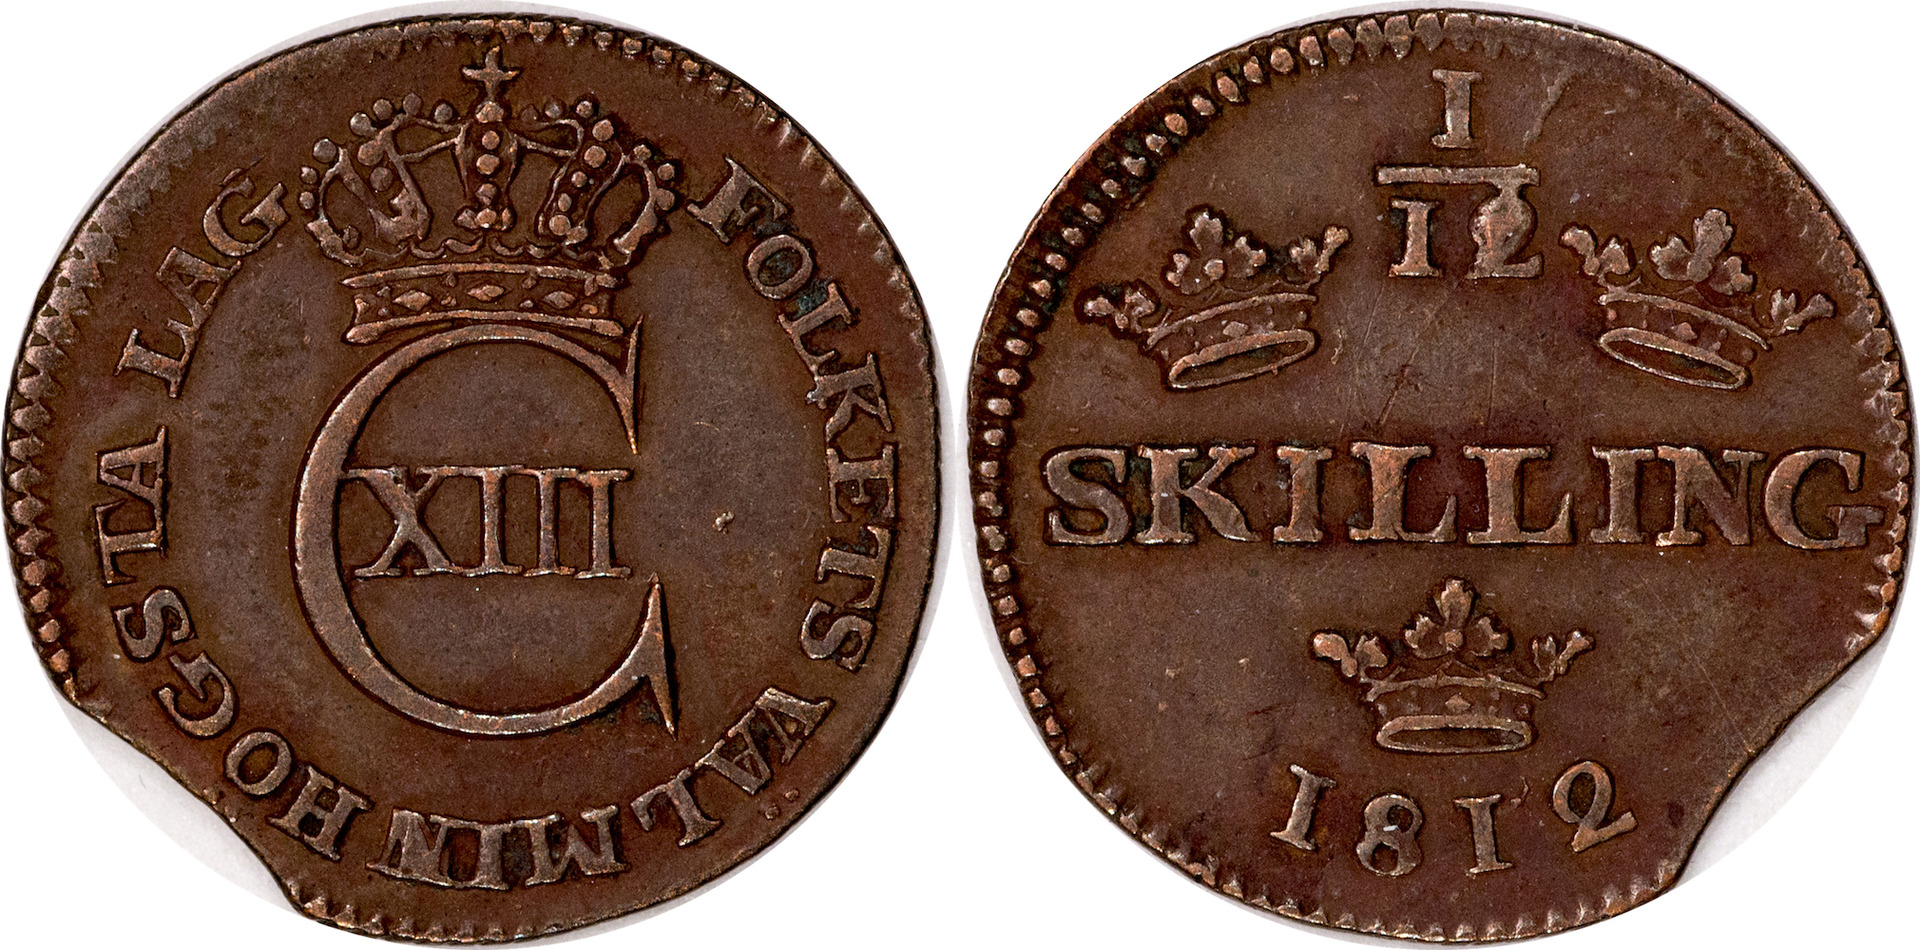 Sweden - 1812 One Twelfth Skilling copy.jpg